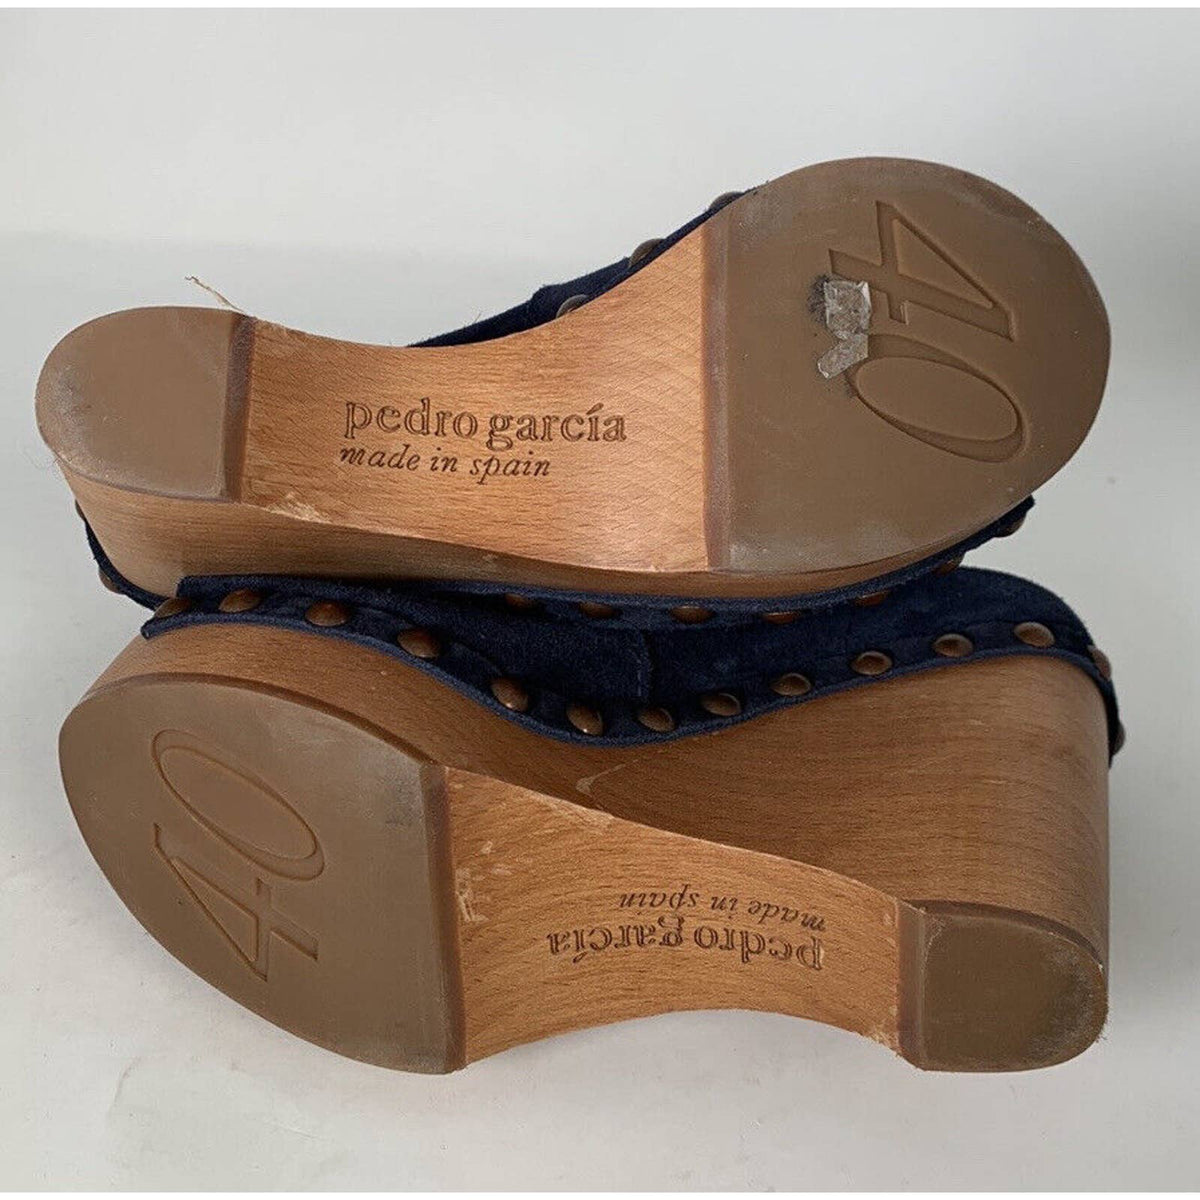 Pedro Garcia Blue Suede Leather Wedge Sandals Sz.10(40)